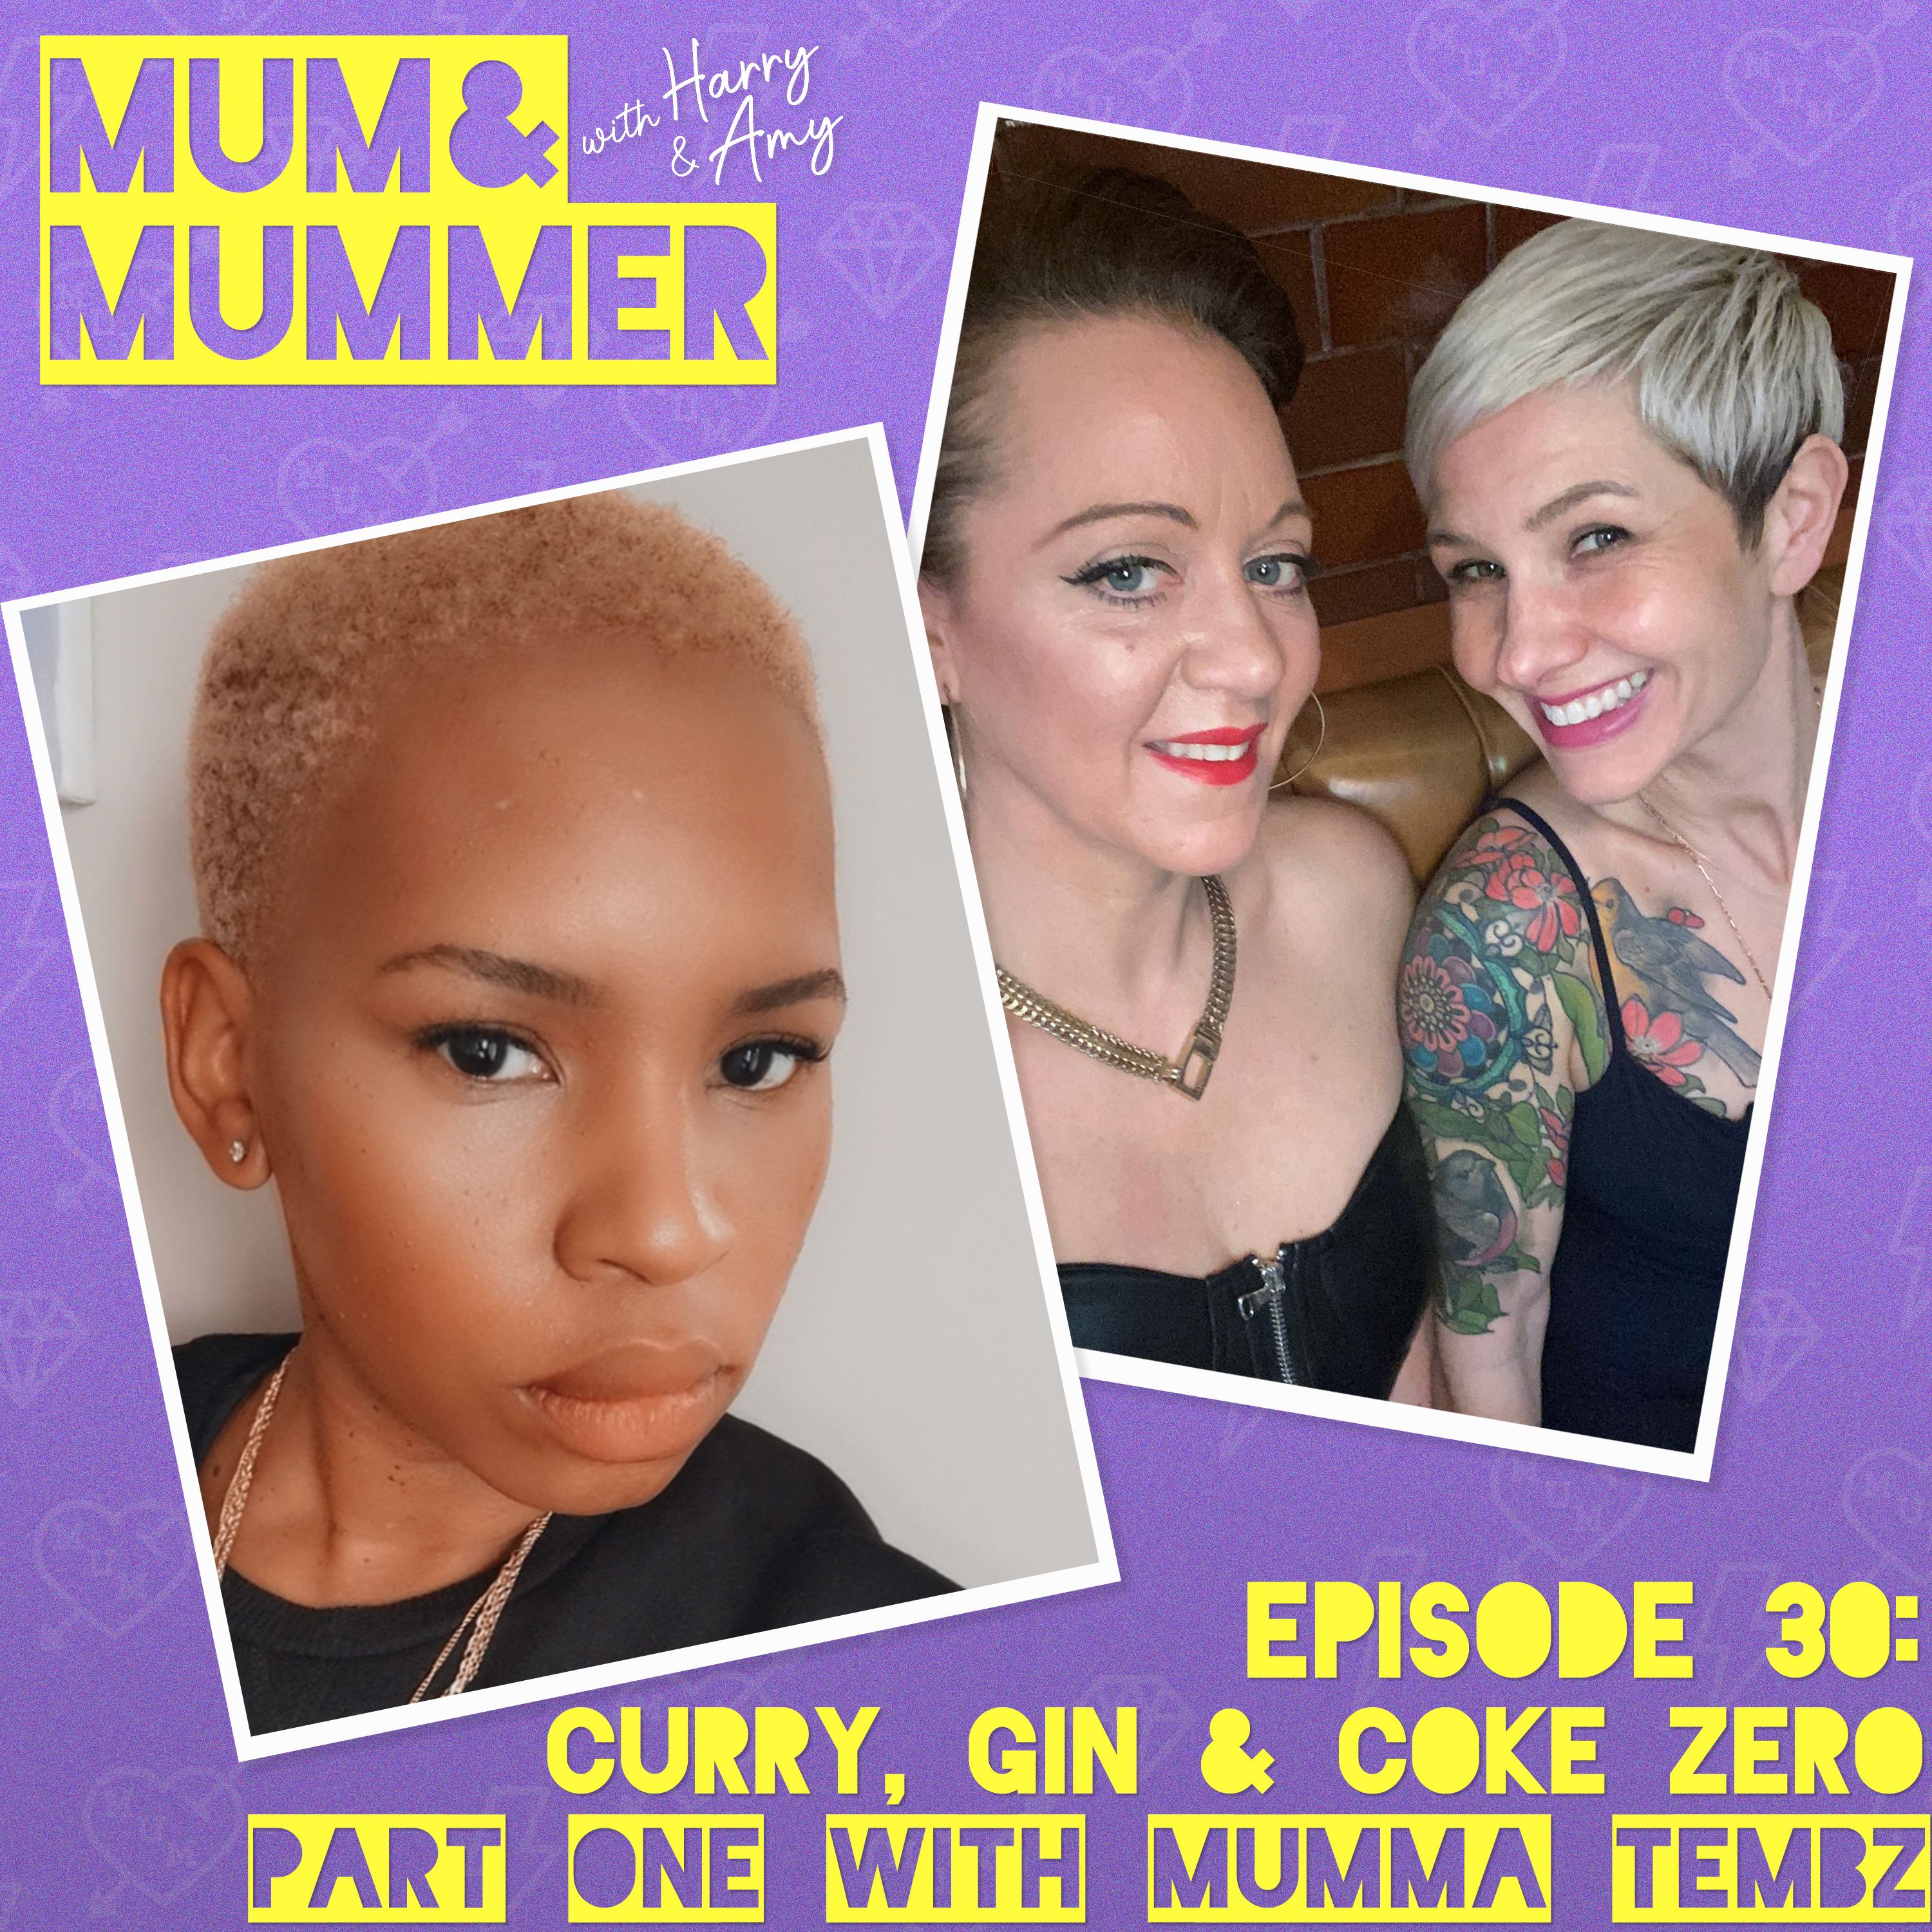 Curry, gin & coke zero Part 1, with Mumma Tembz